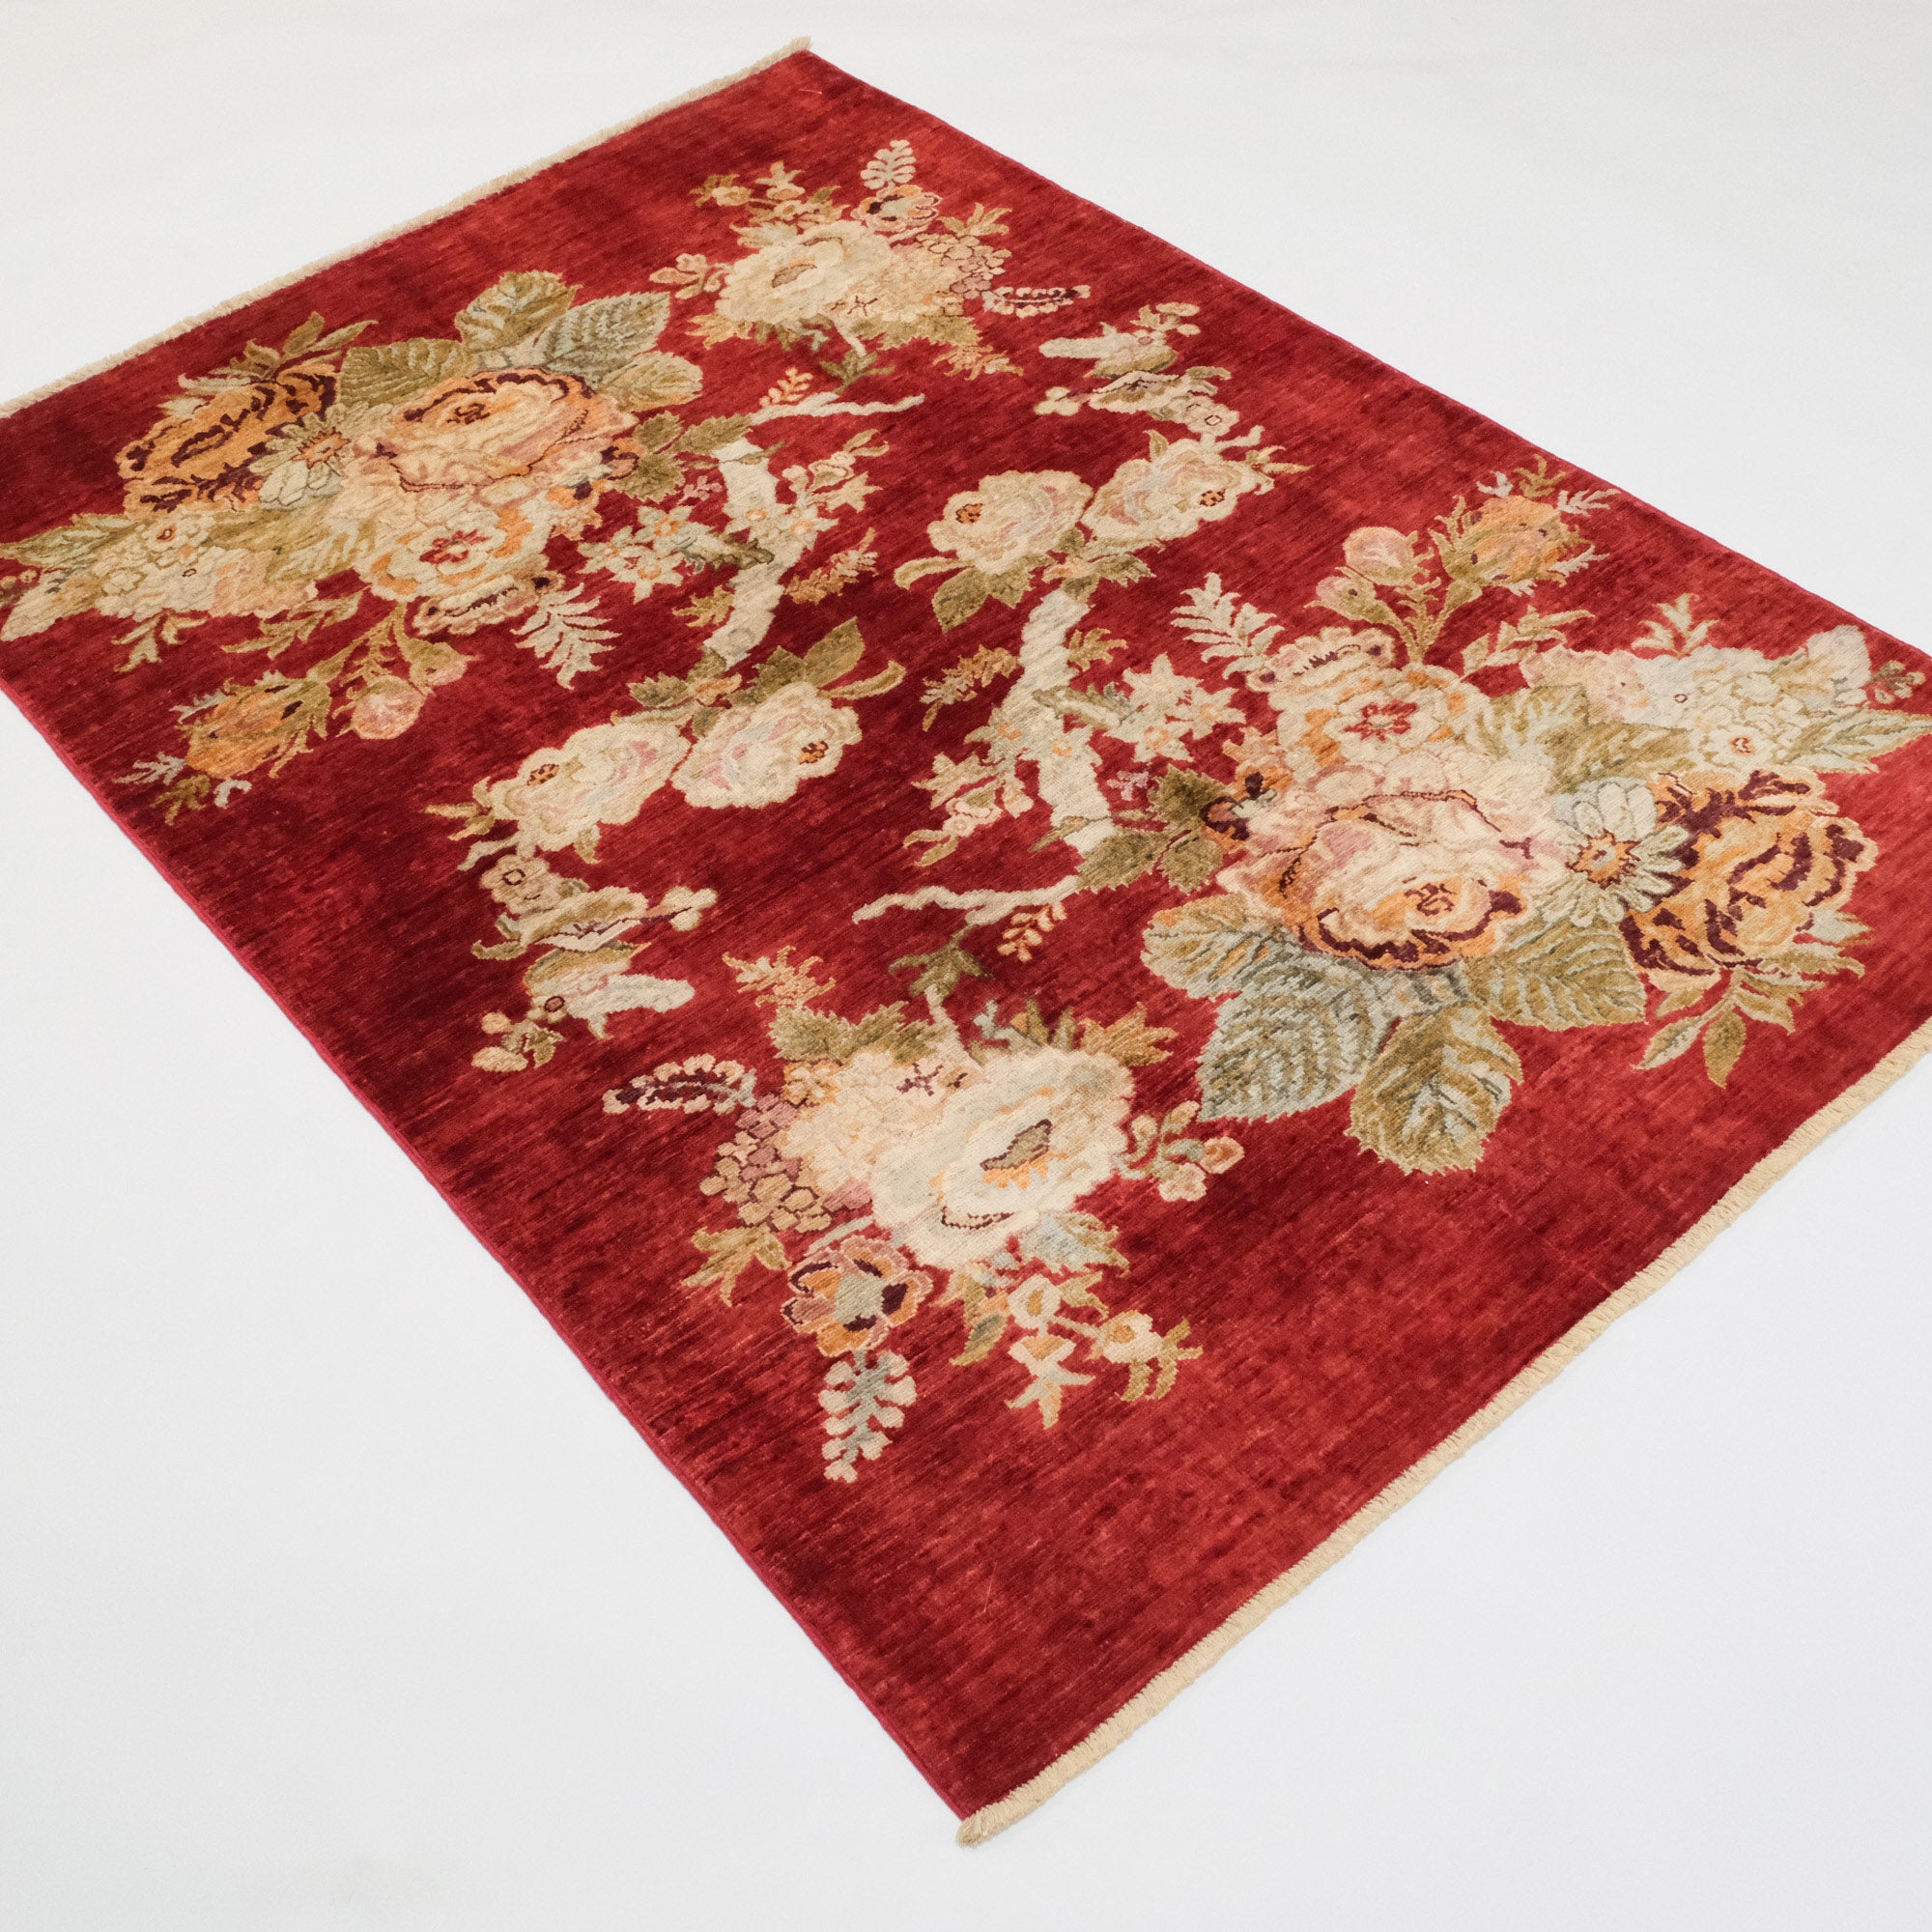 Hand-Woven Karabakh Patterned Red Wool Carpet